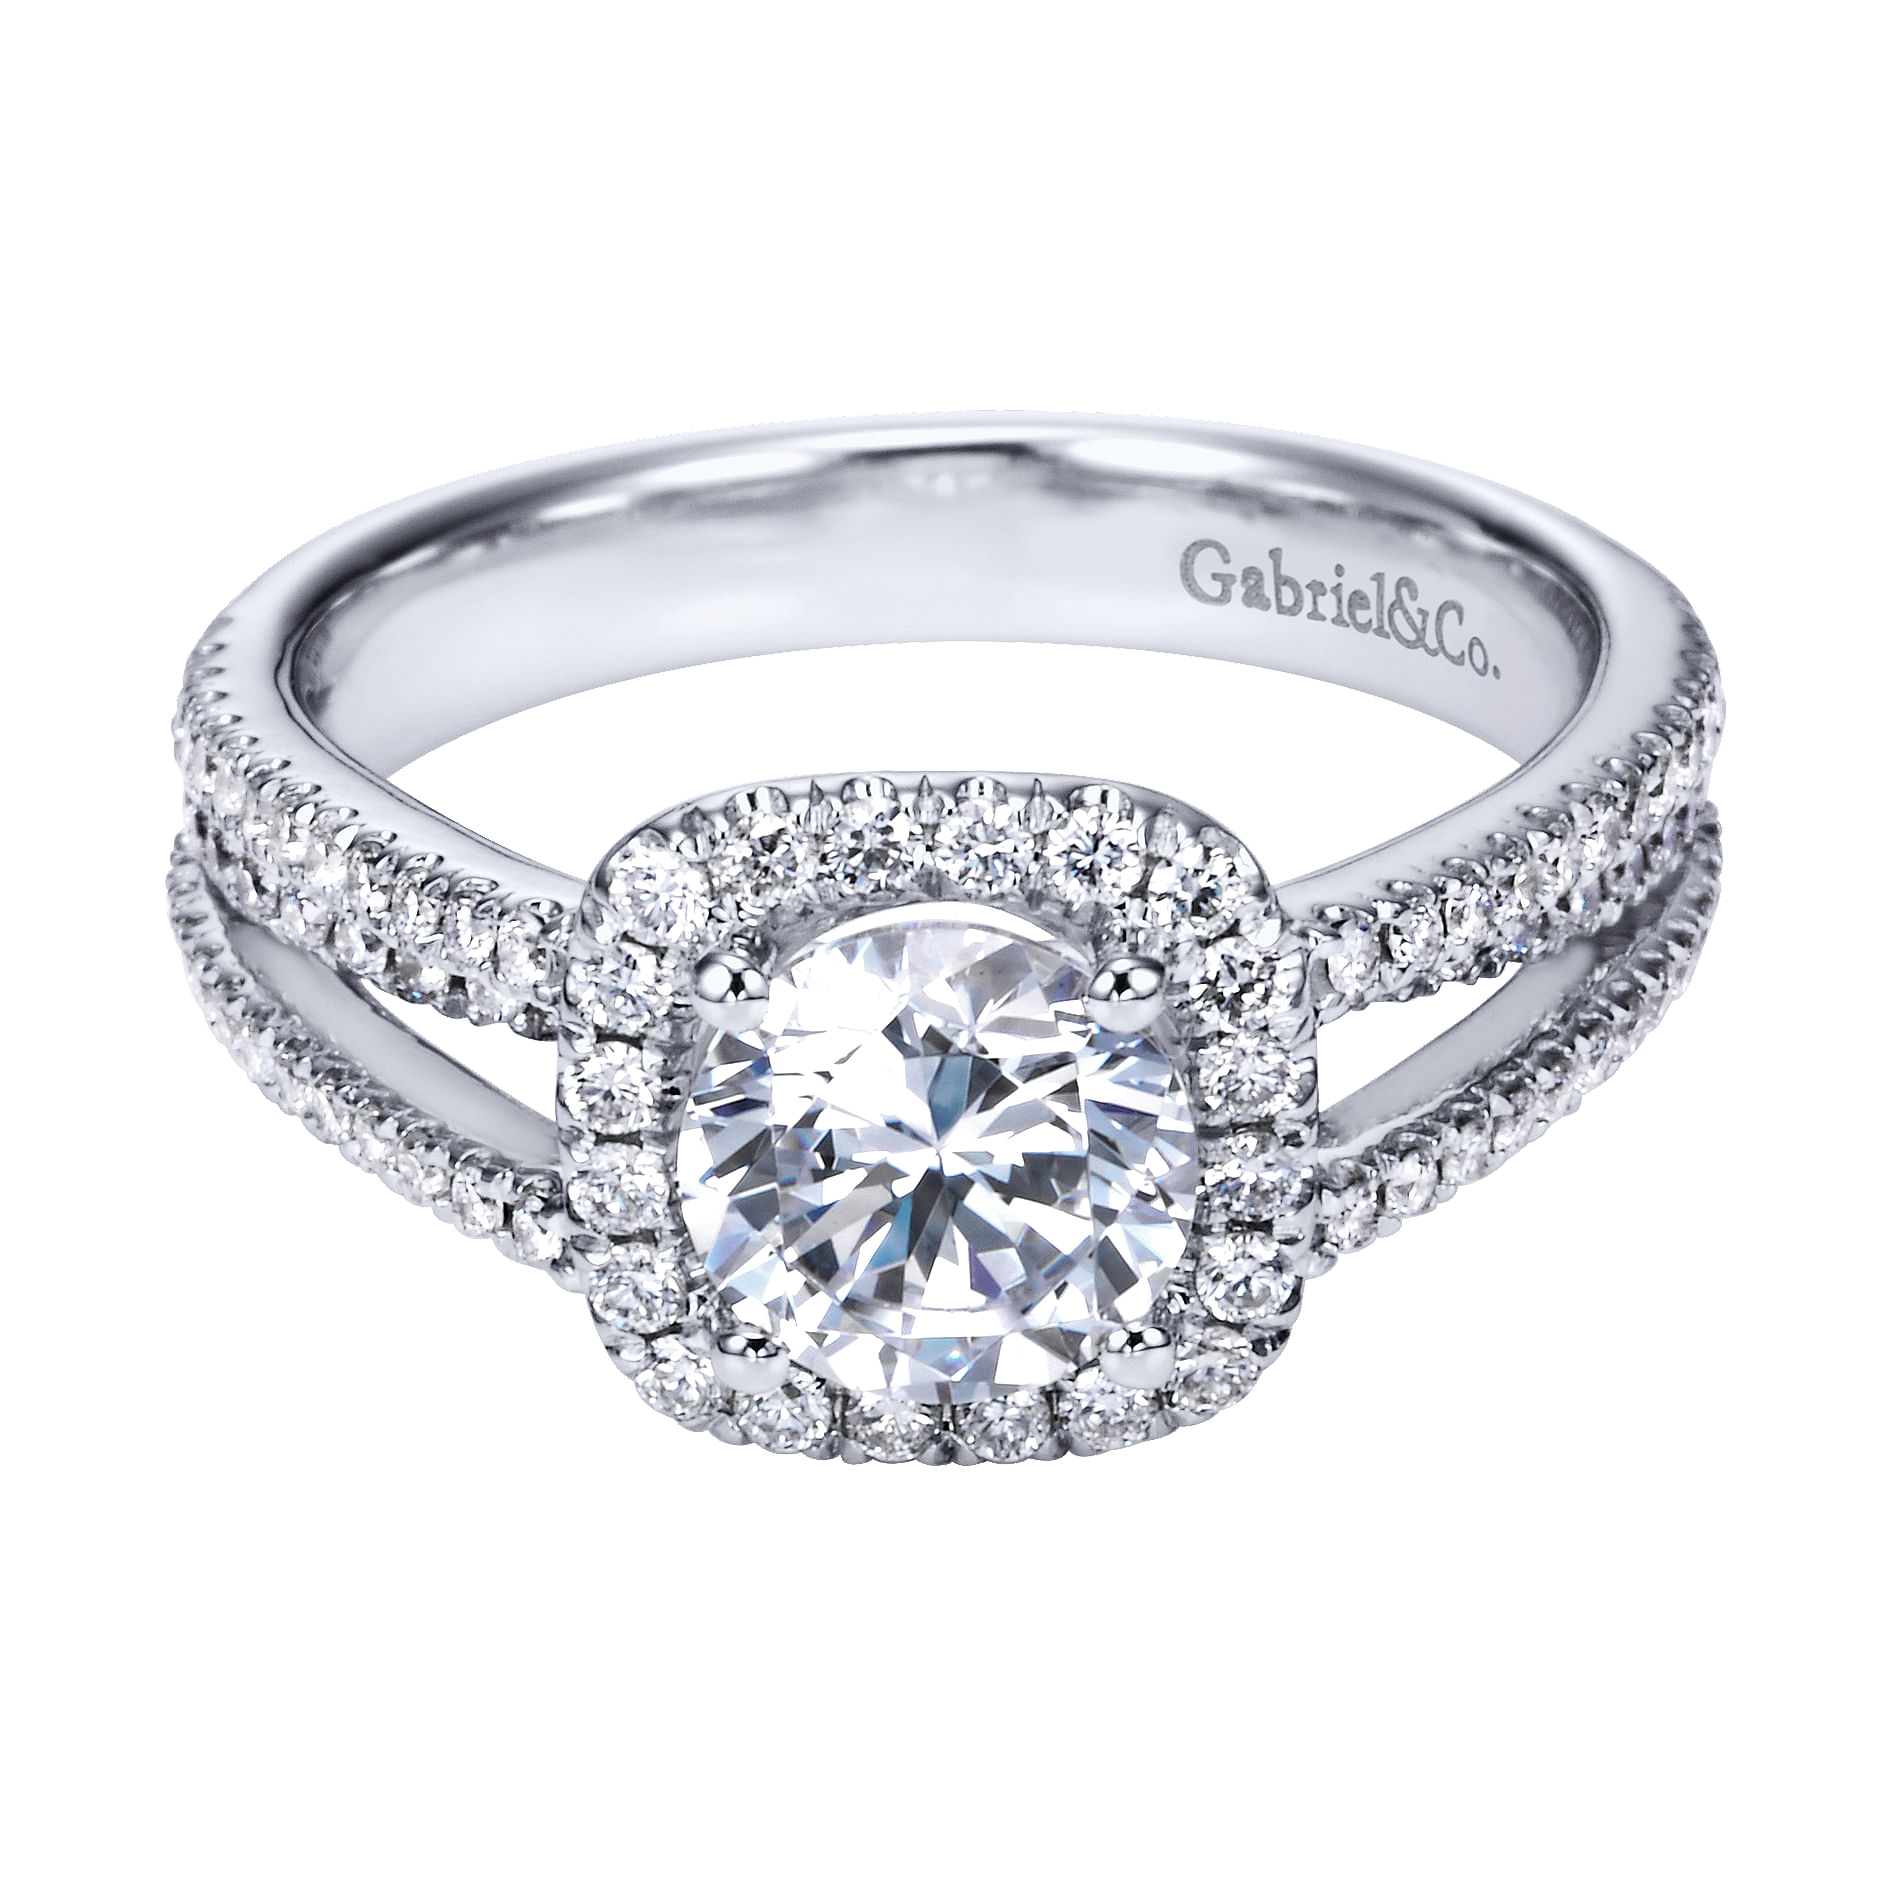 Hillary - 14K White Gold Round Halo Diamond Engagement Ring